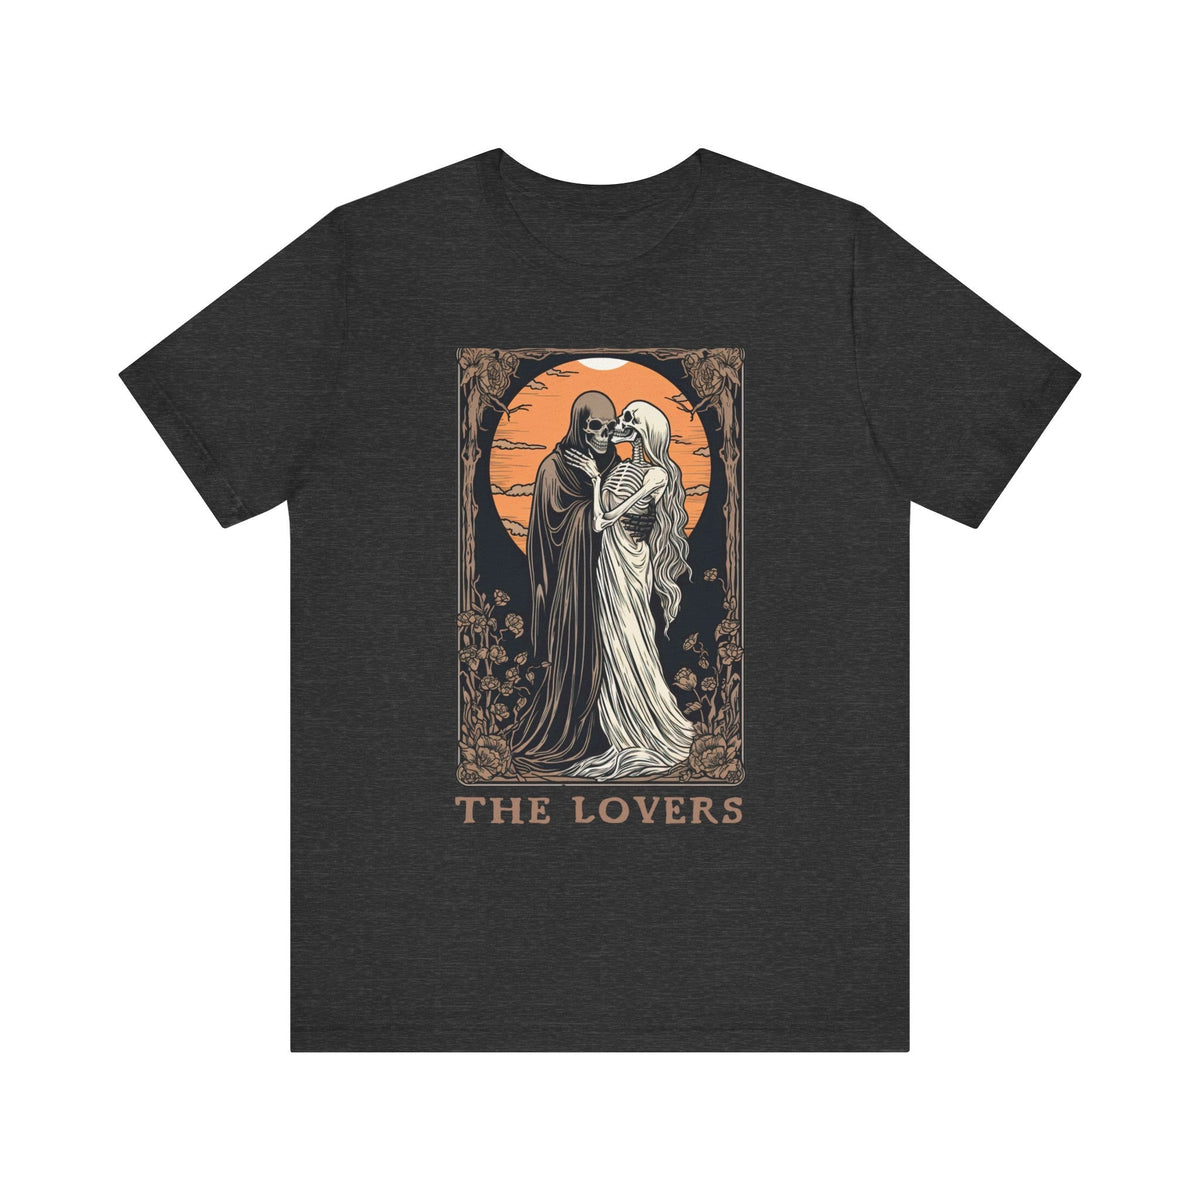 The Lovers Skeleton Tarot T - Shirt - Goth Cloth Co.T - Shirt30163428669209810003